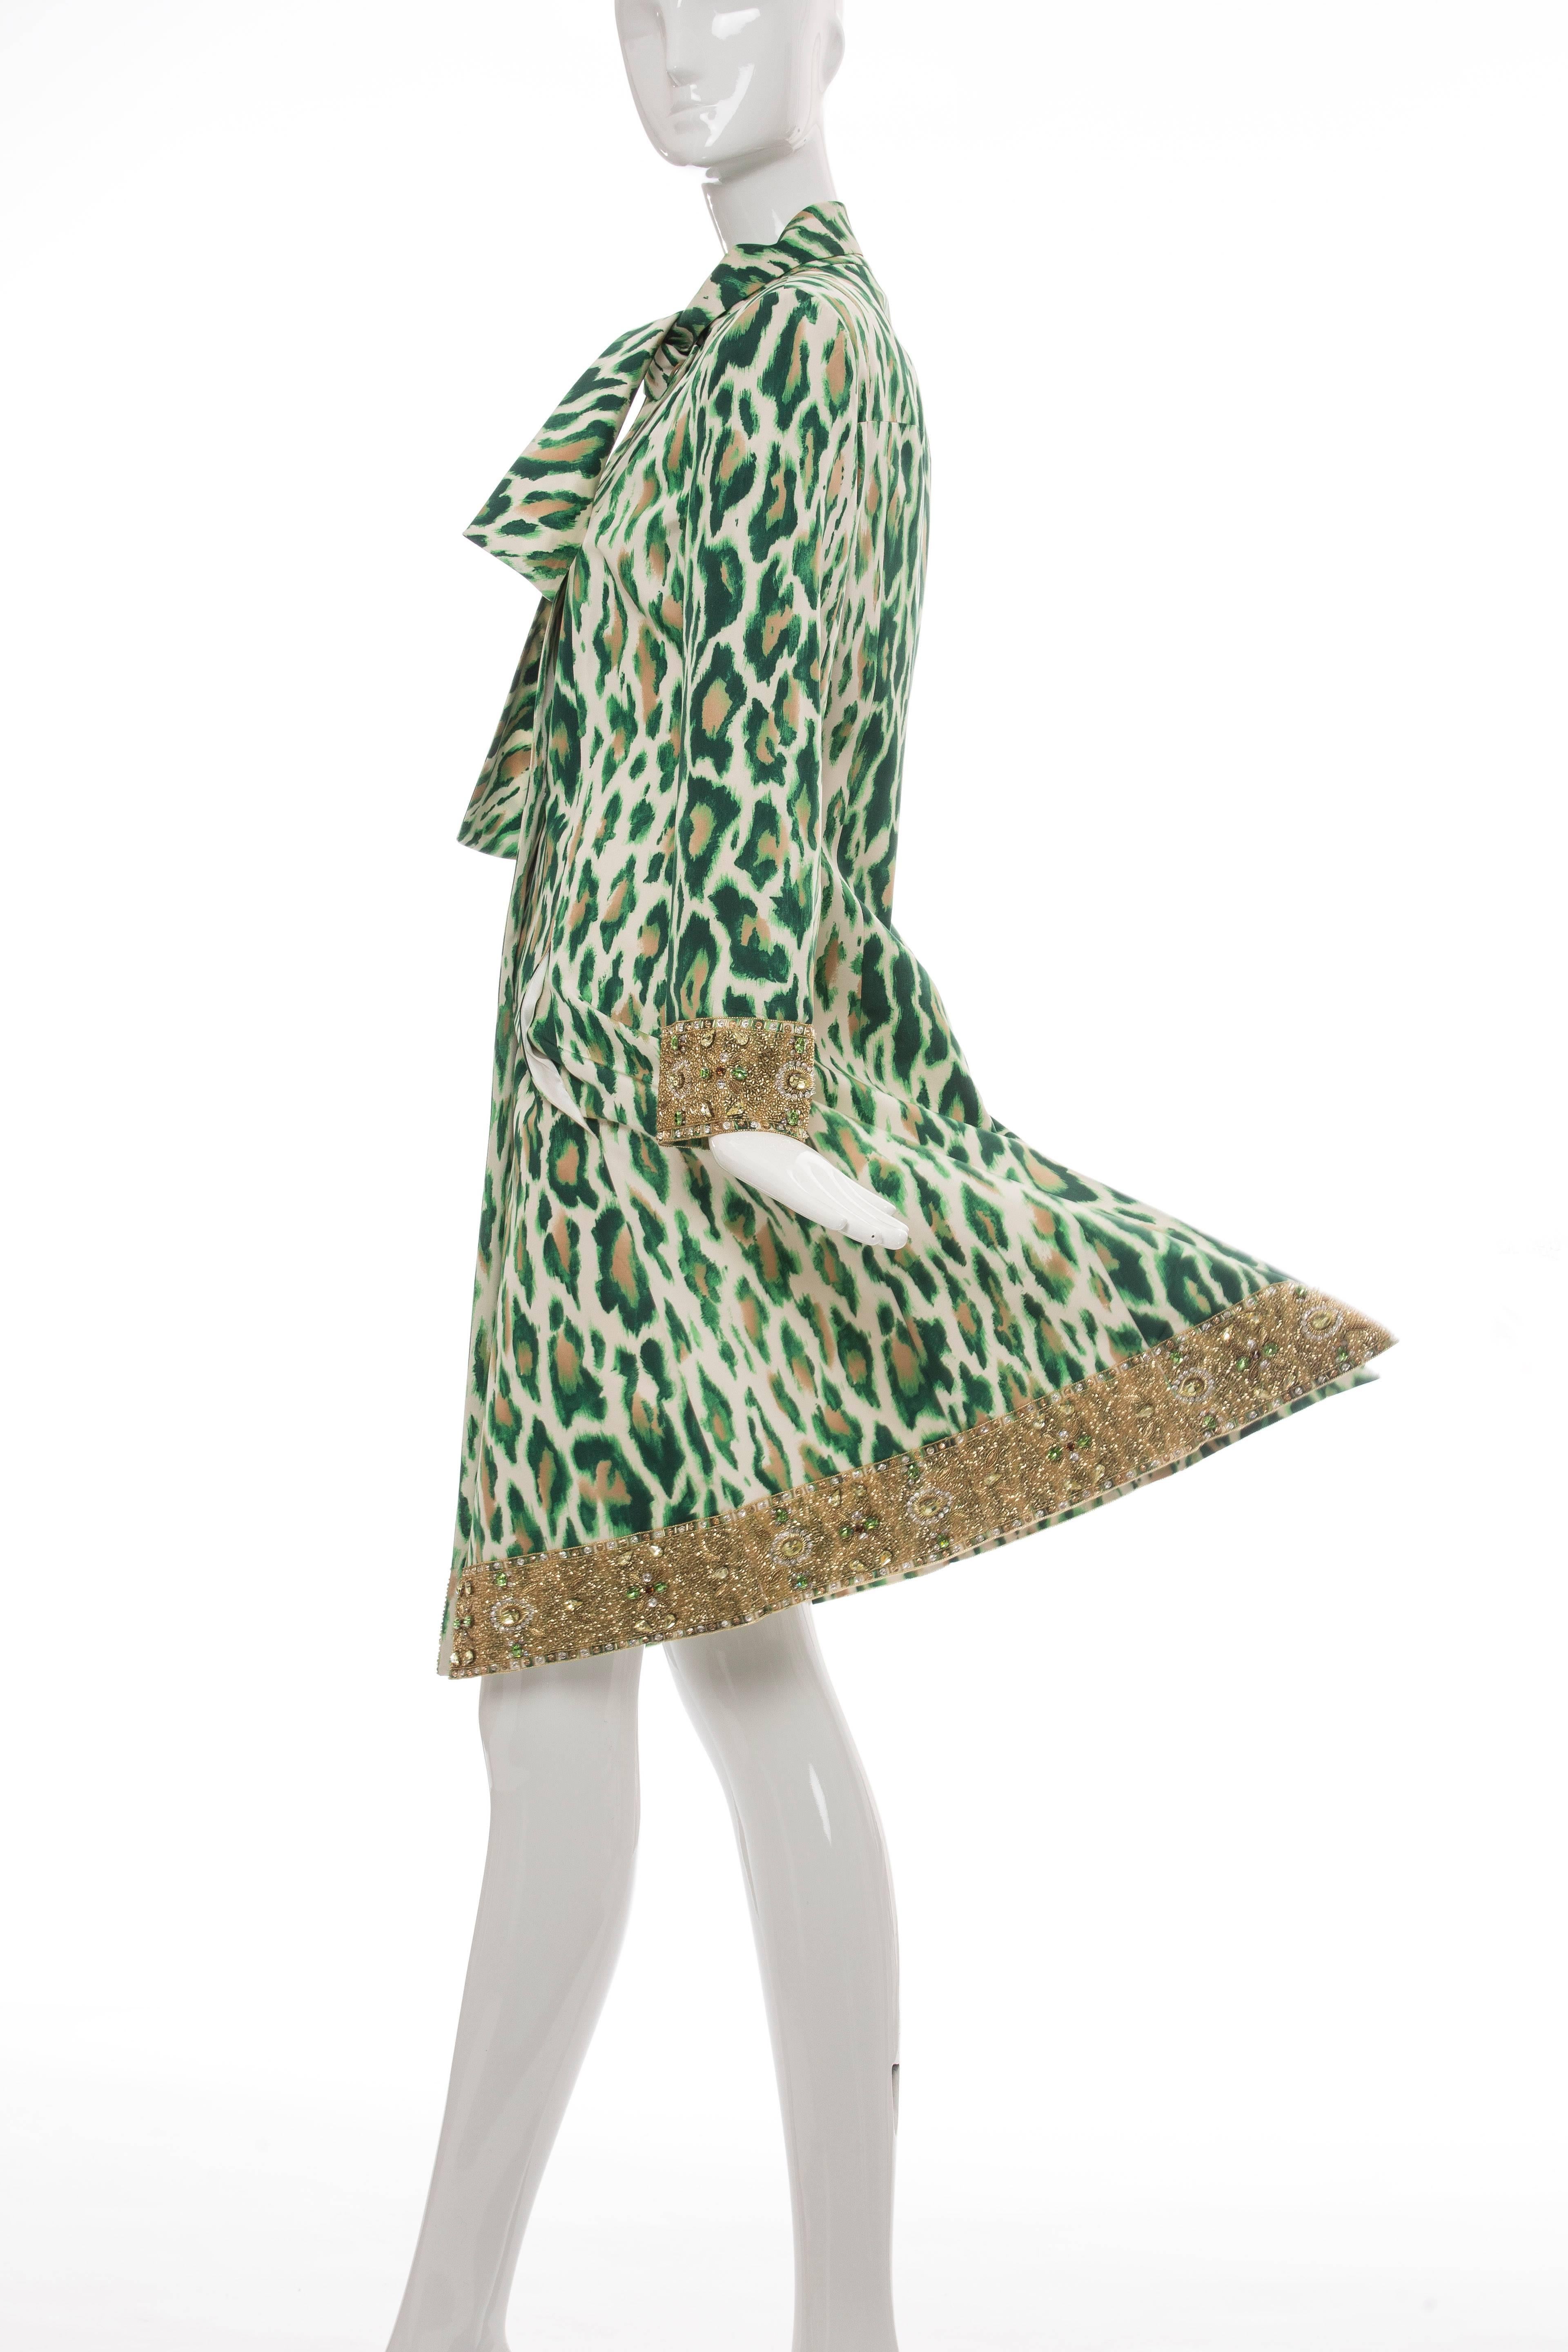 Christian Dior By John Galliano Silk Embellished Leopard Coat, Resort 2008  1